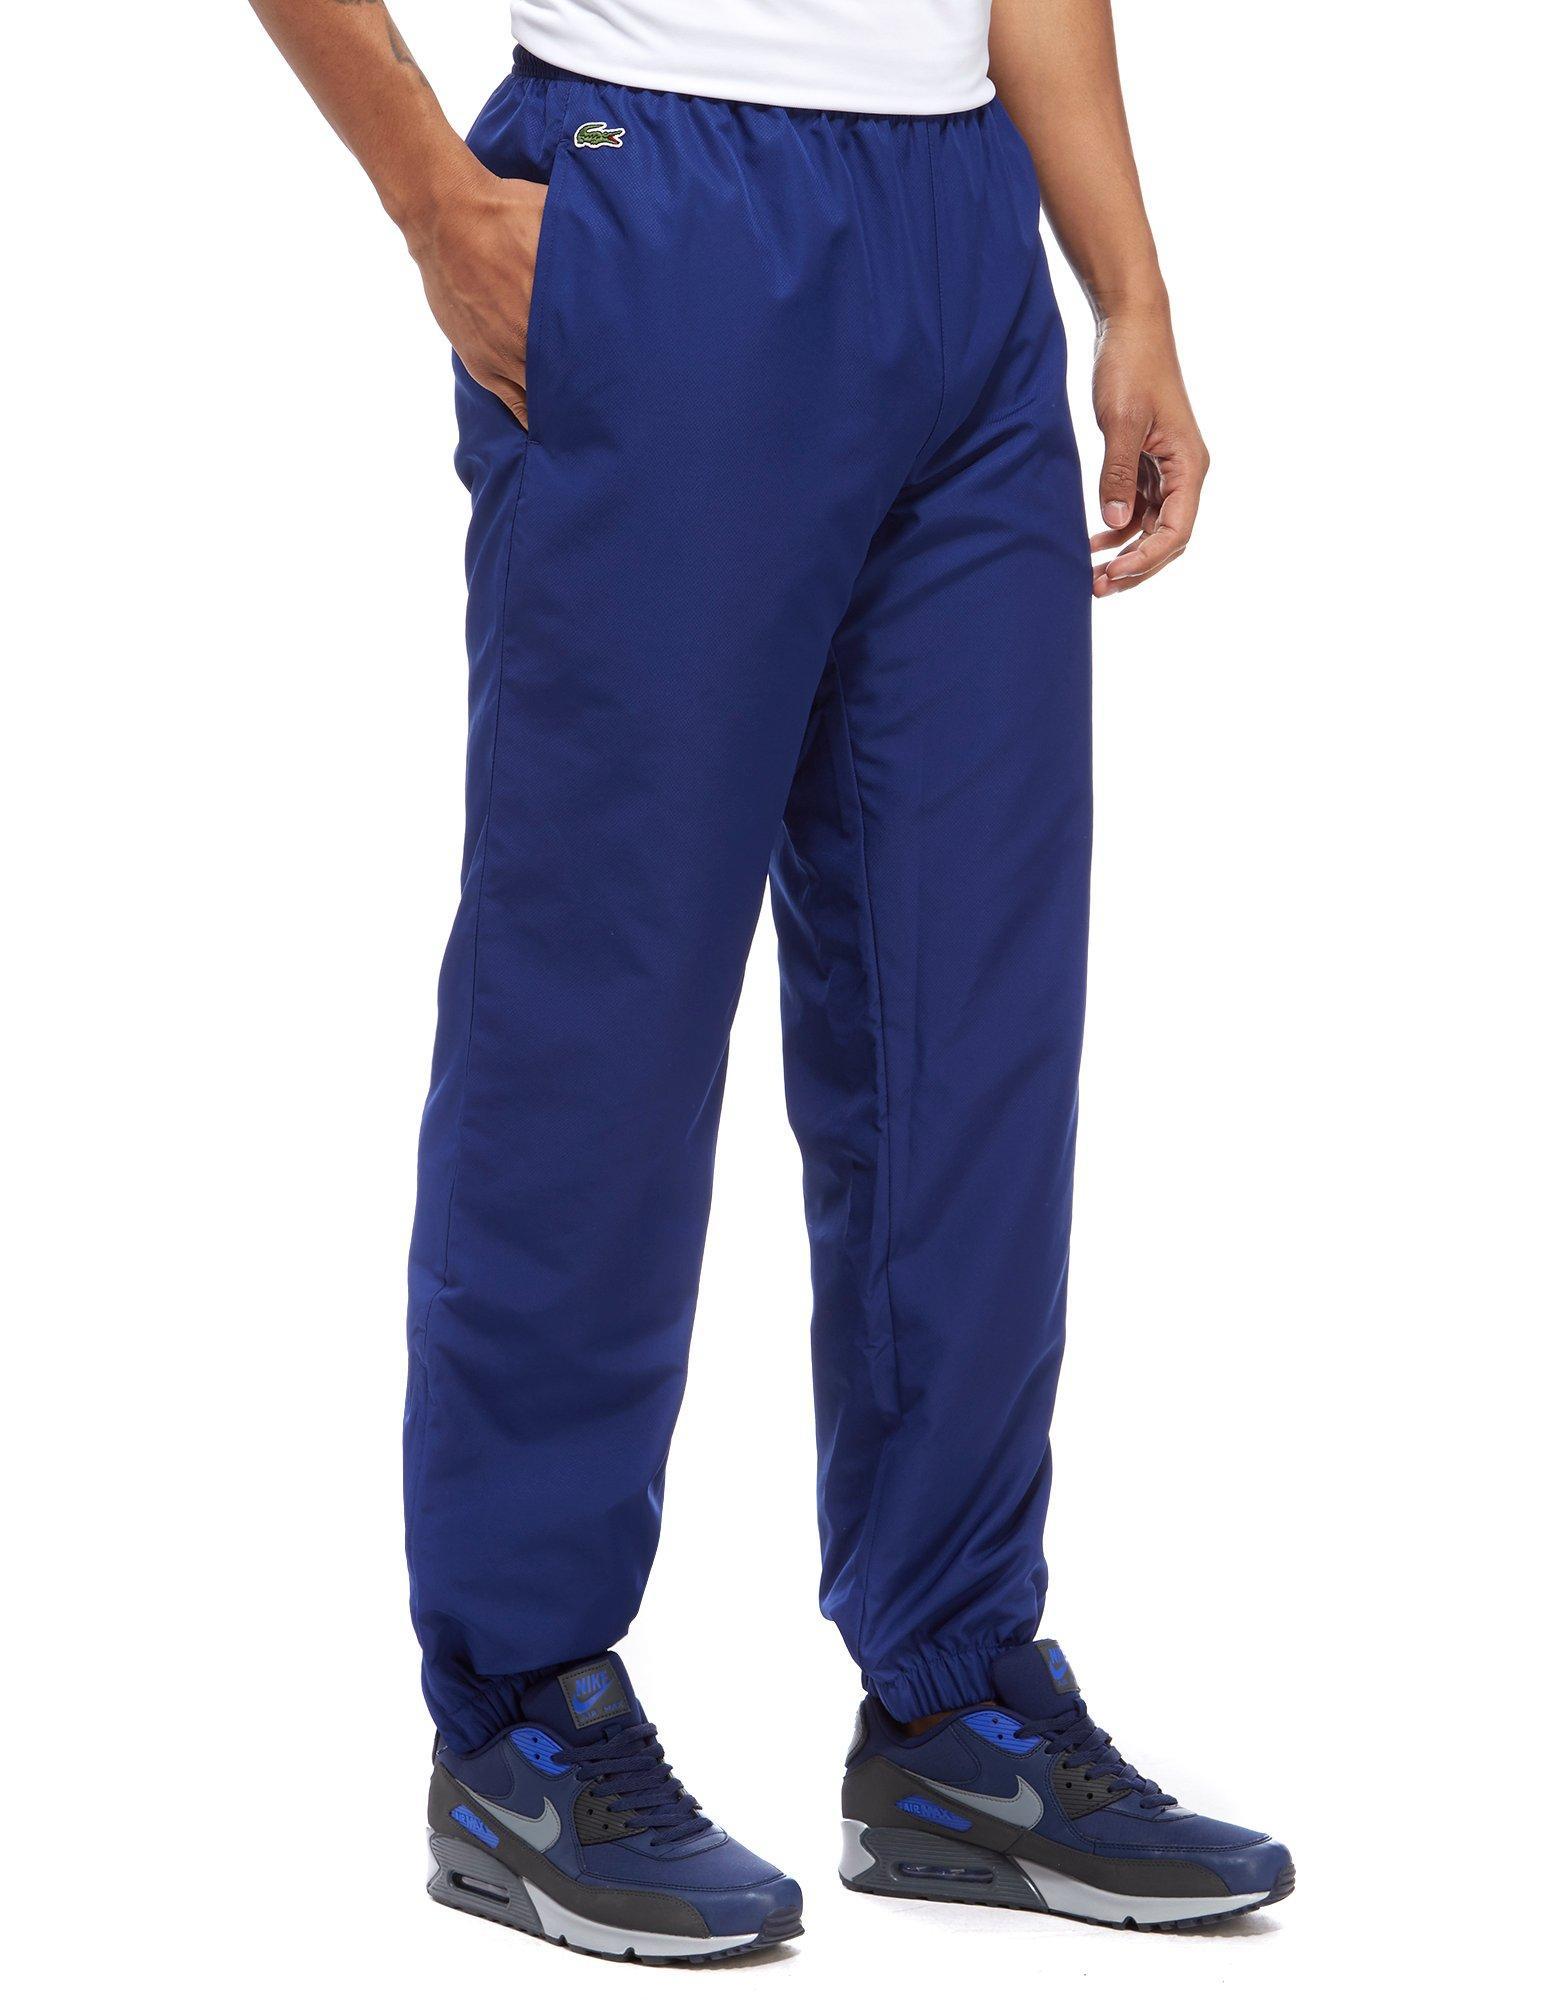 lacoste track pants blue